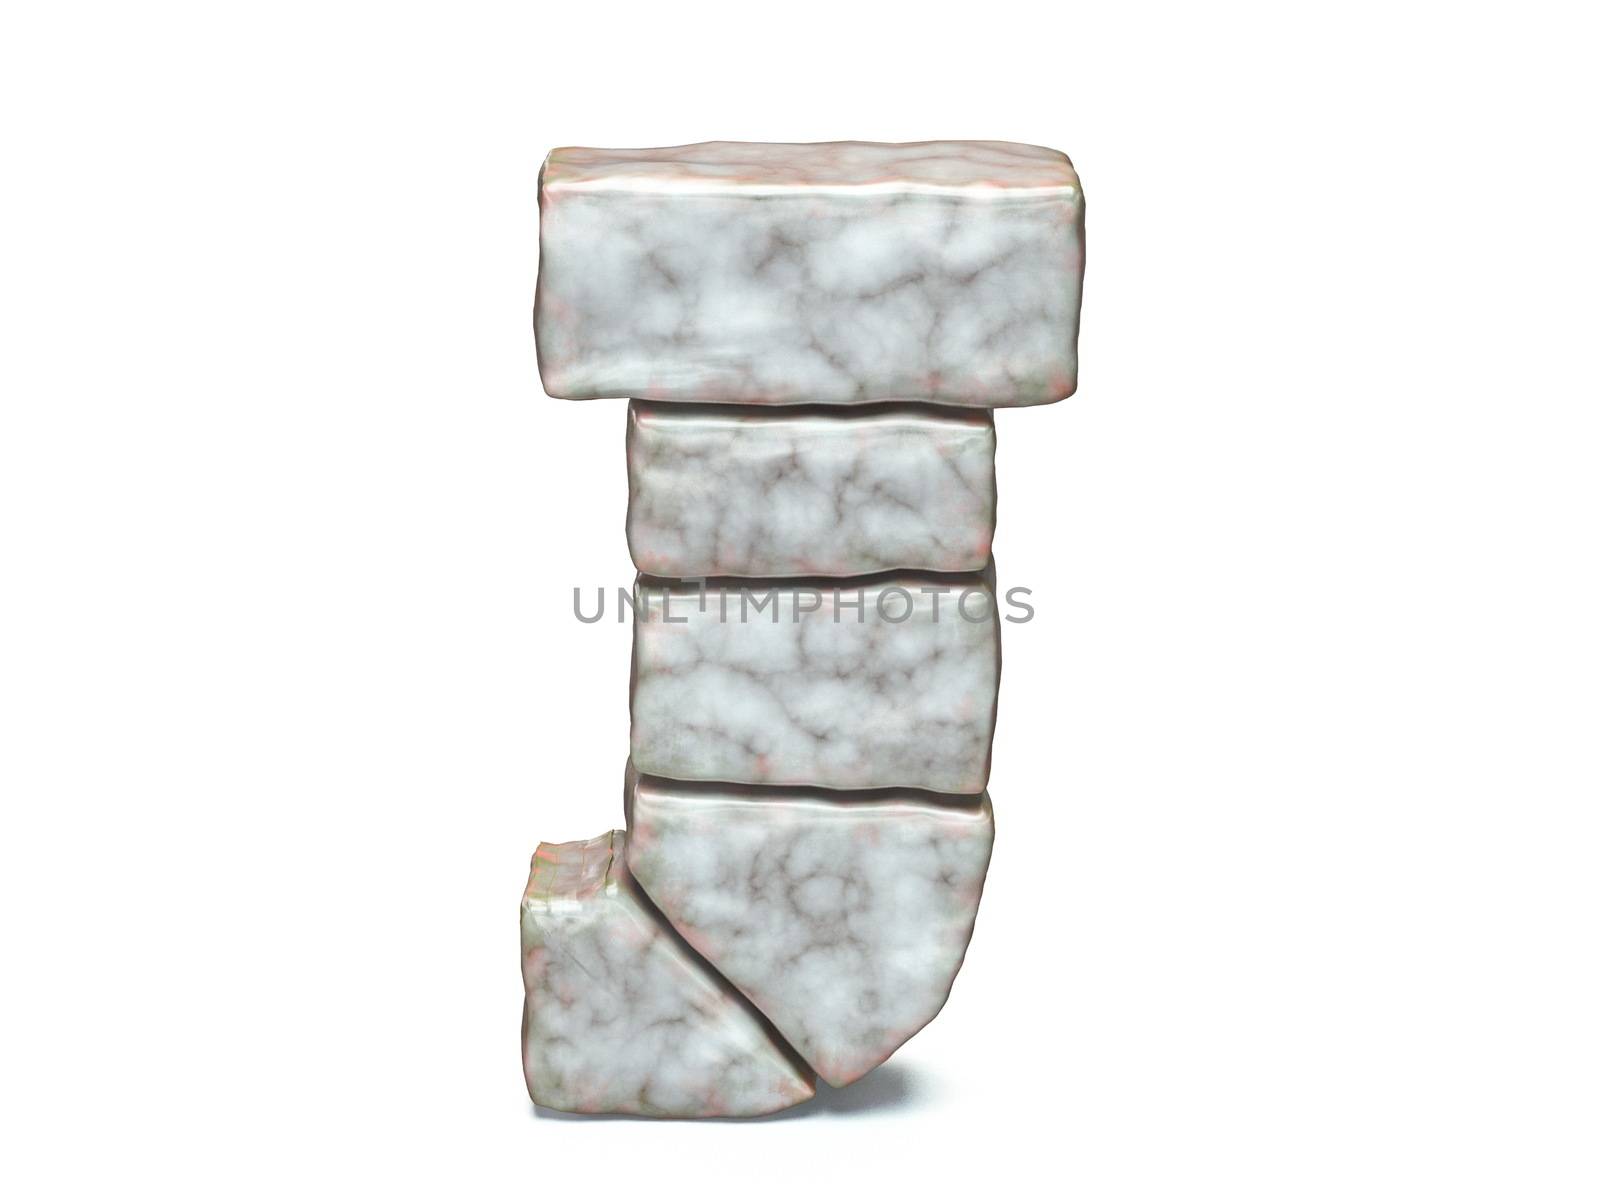 Rock masonry font letter J 3D render illustration isolated on white background